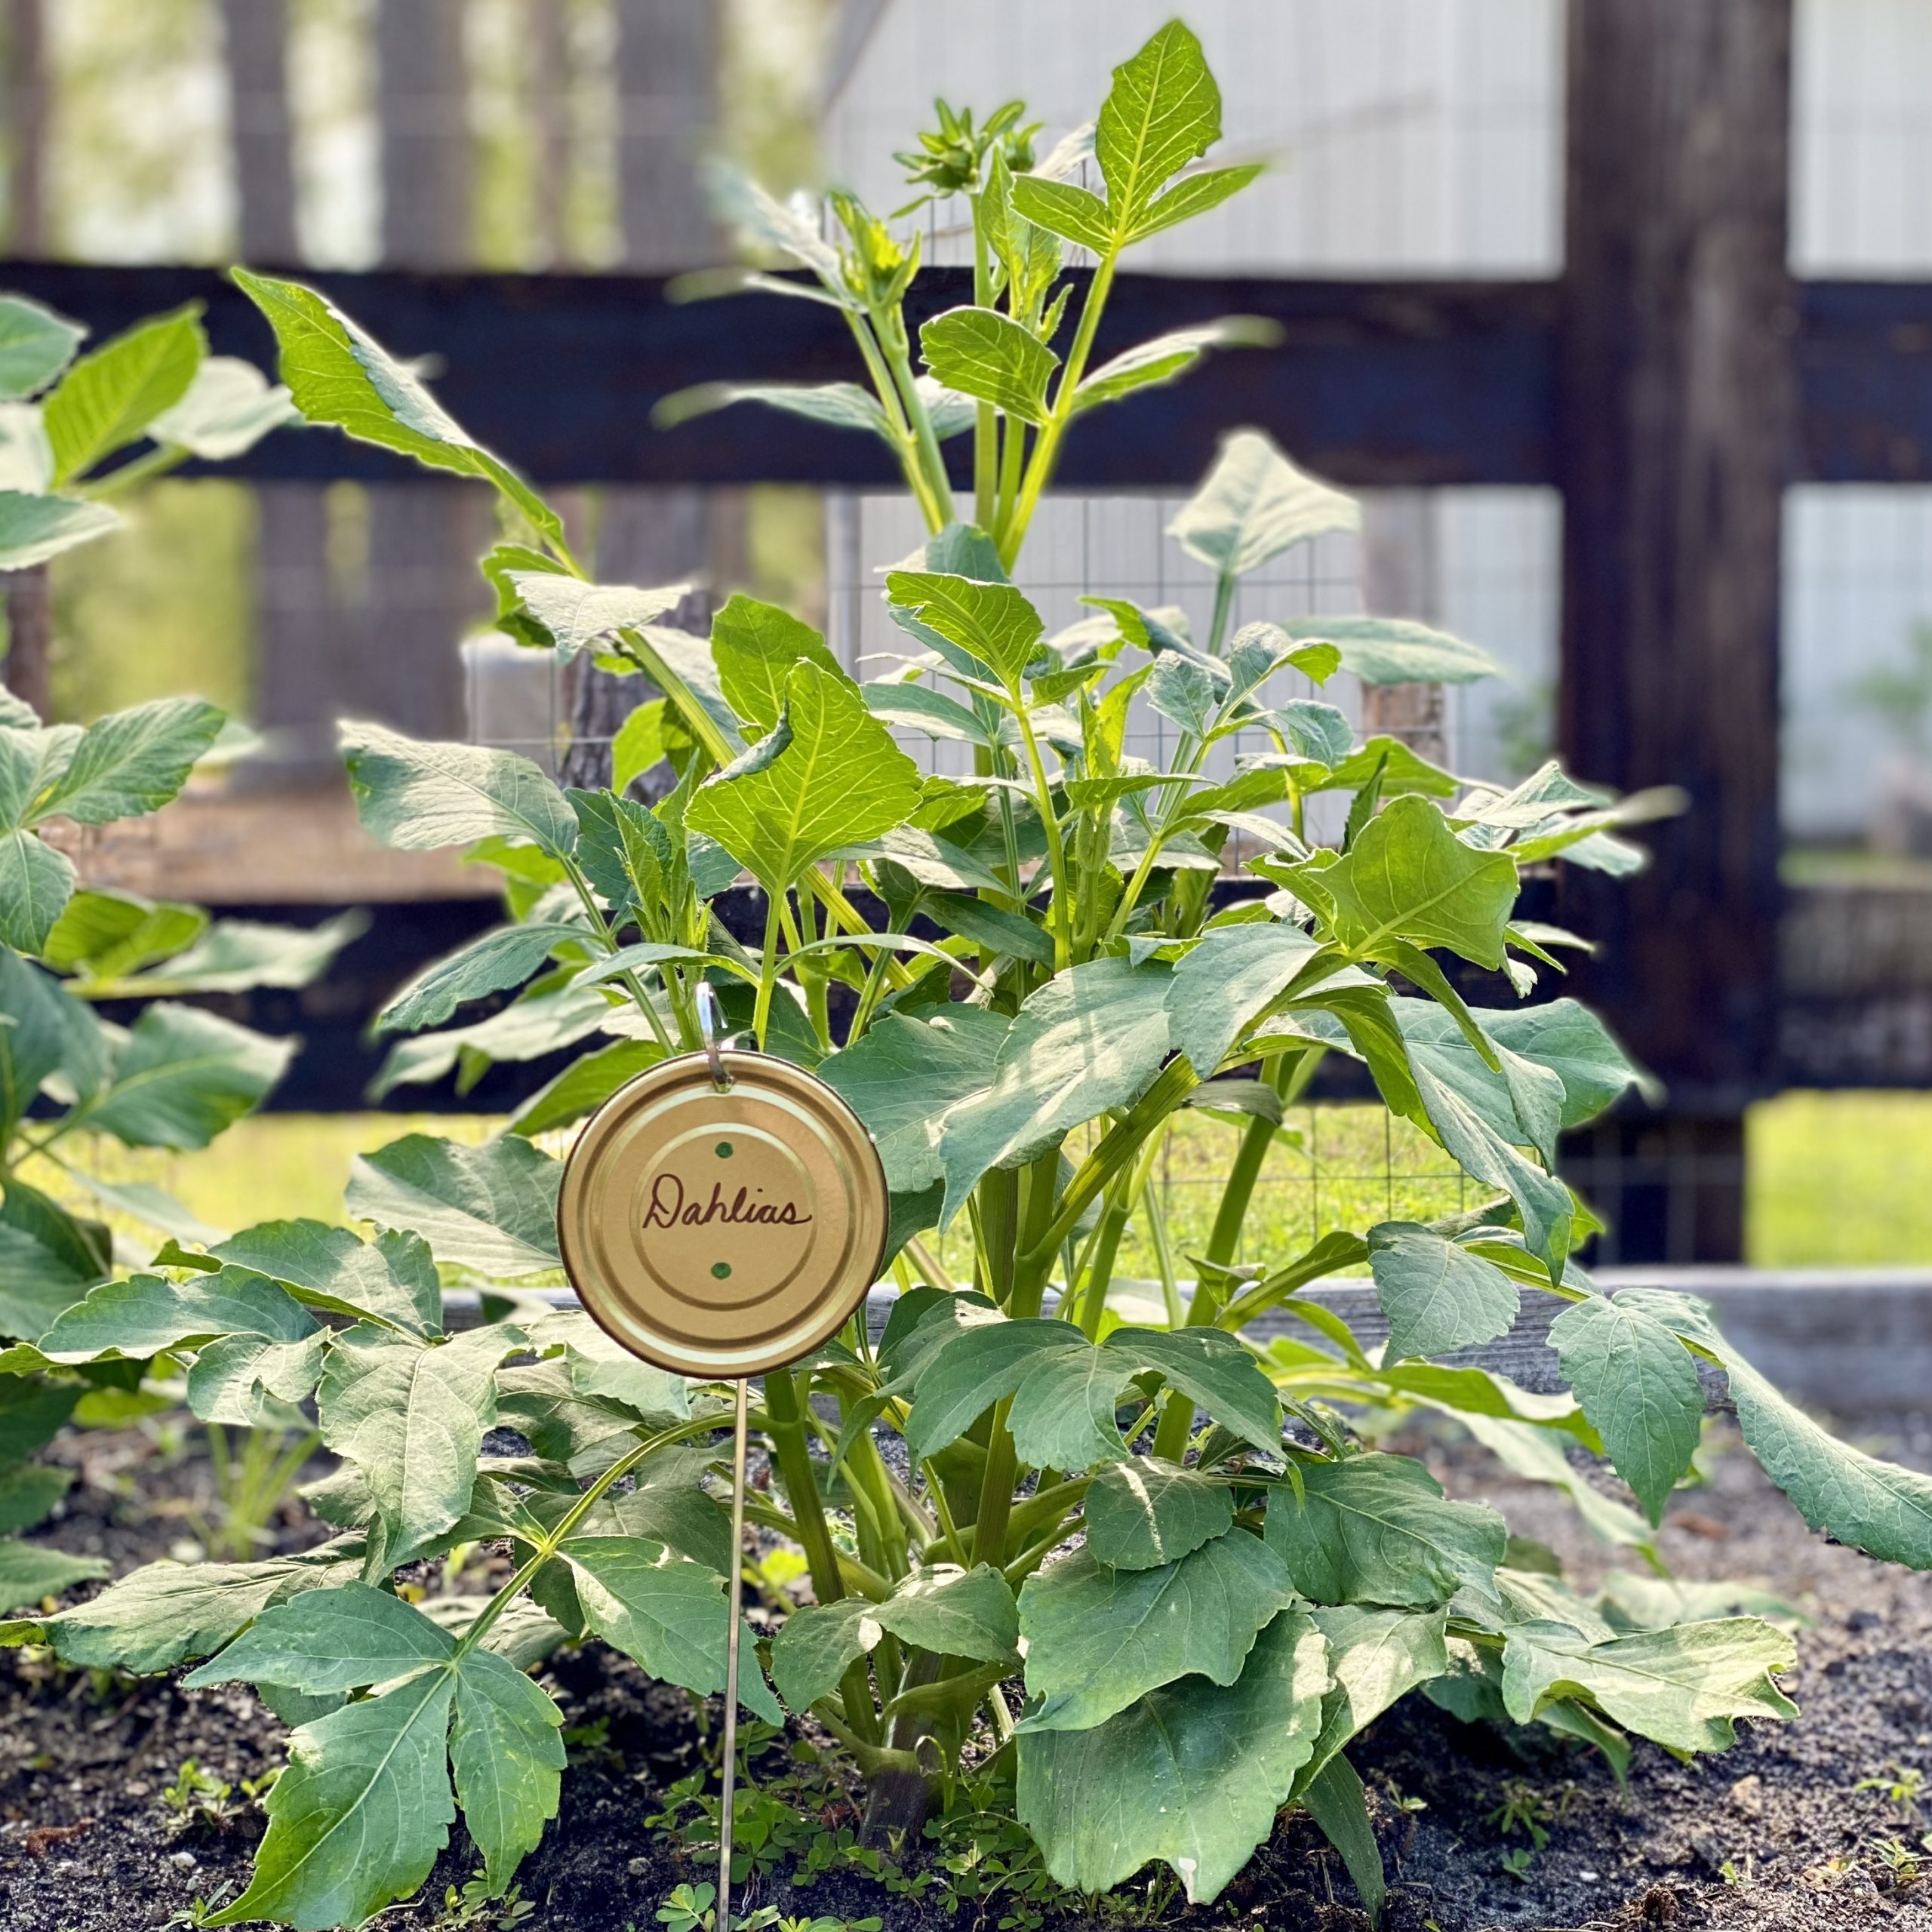 DIY garden marker with "dahlia" written on it next to a dahlia plant.